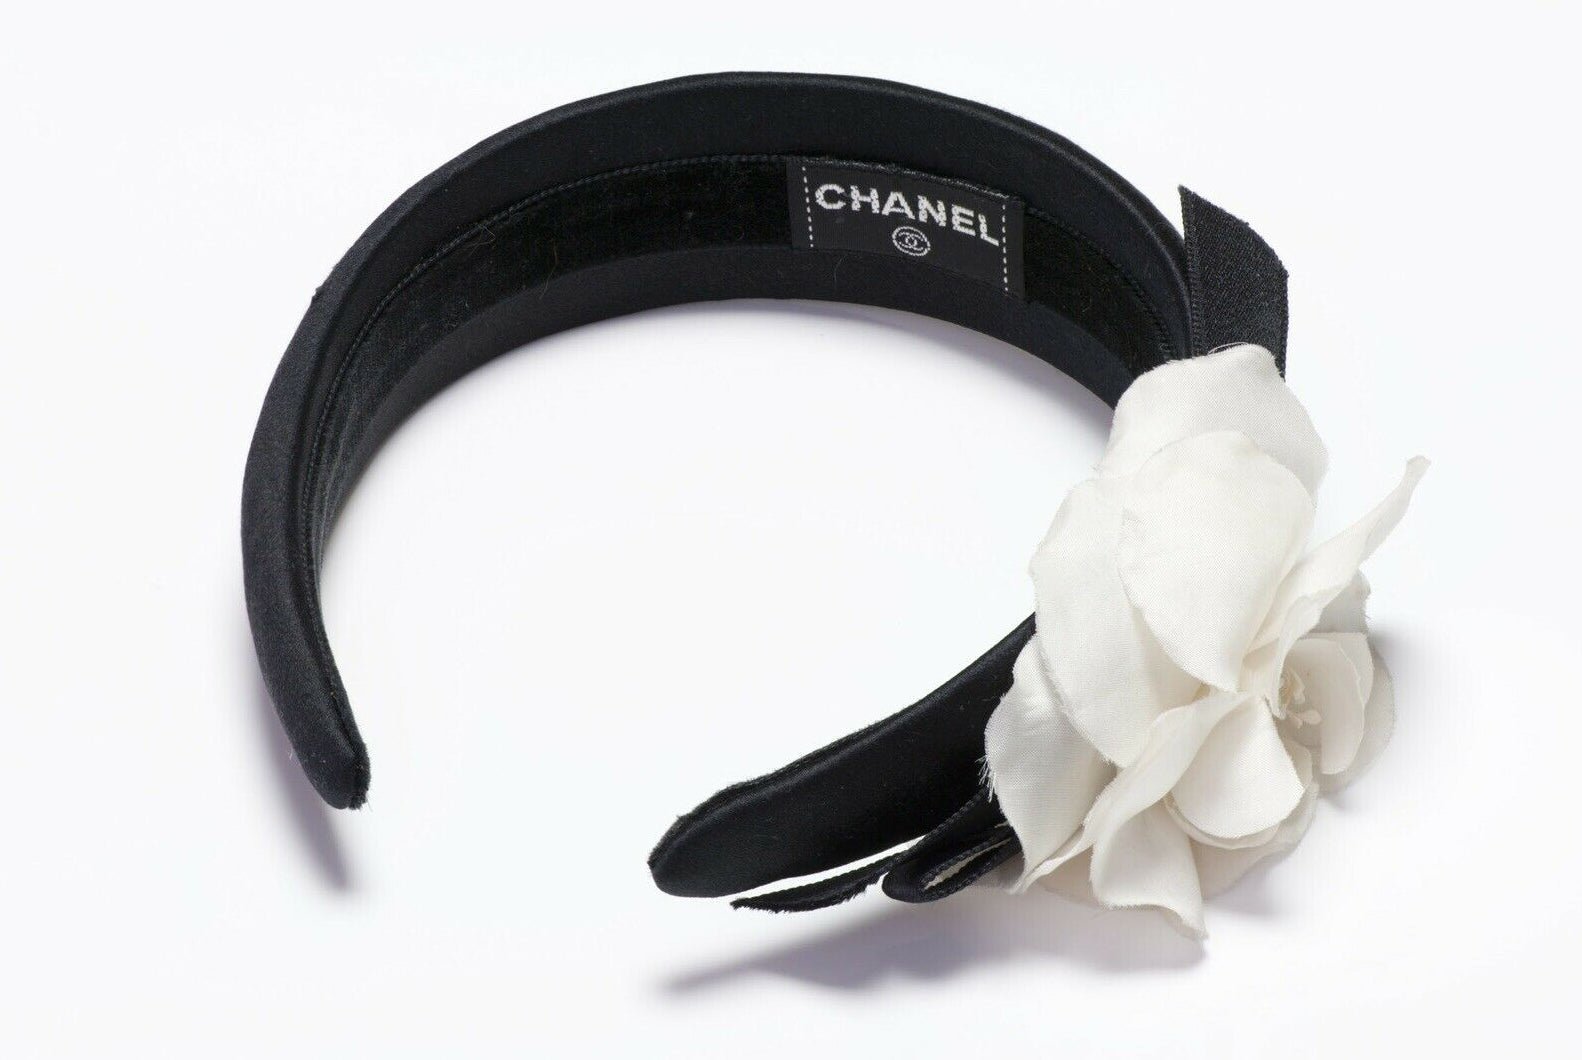 Chanel Paris 1990’s Black Satin Camellia Headband